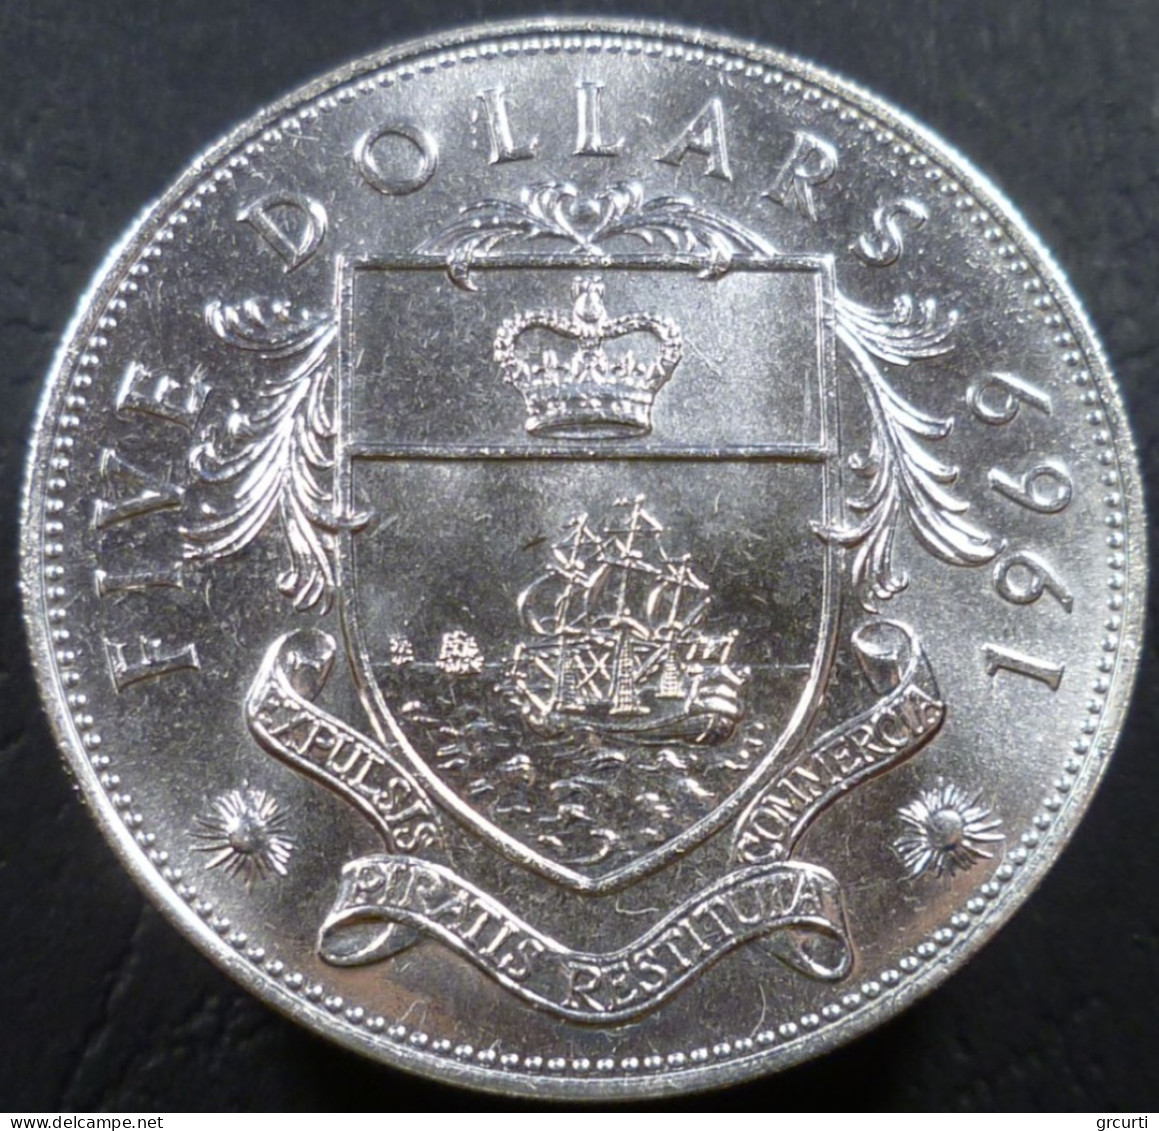 Bahamas - 5 Dollars 1969 - Stemma - KM# 10 - Bahamas